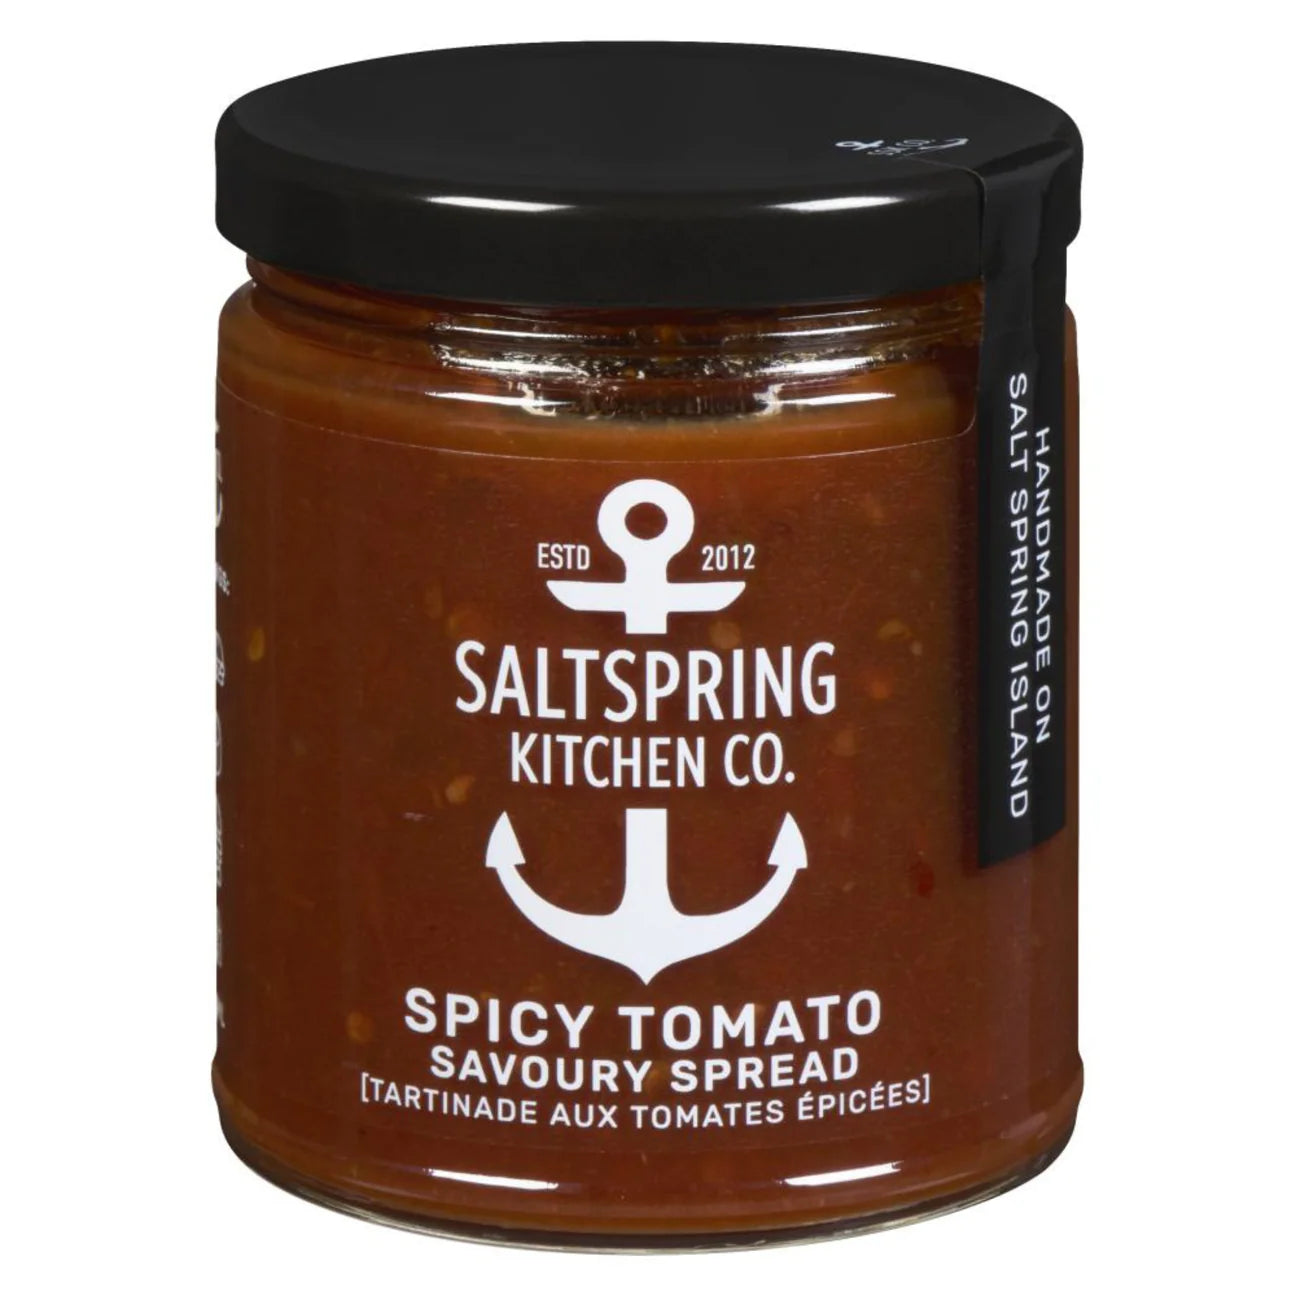 SaltSpring Kitchen Co. Savory Spreads